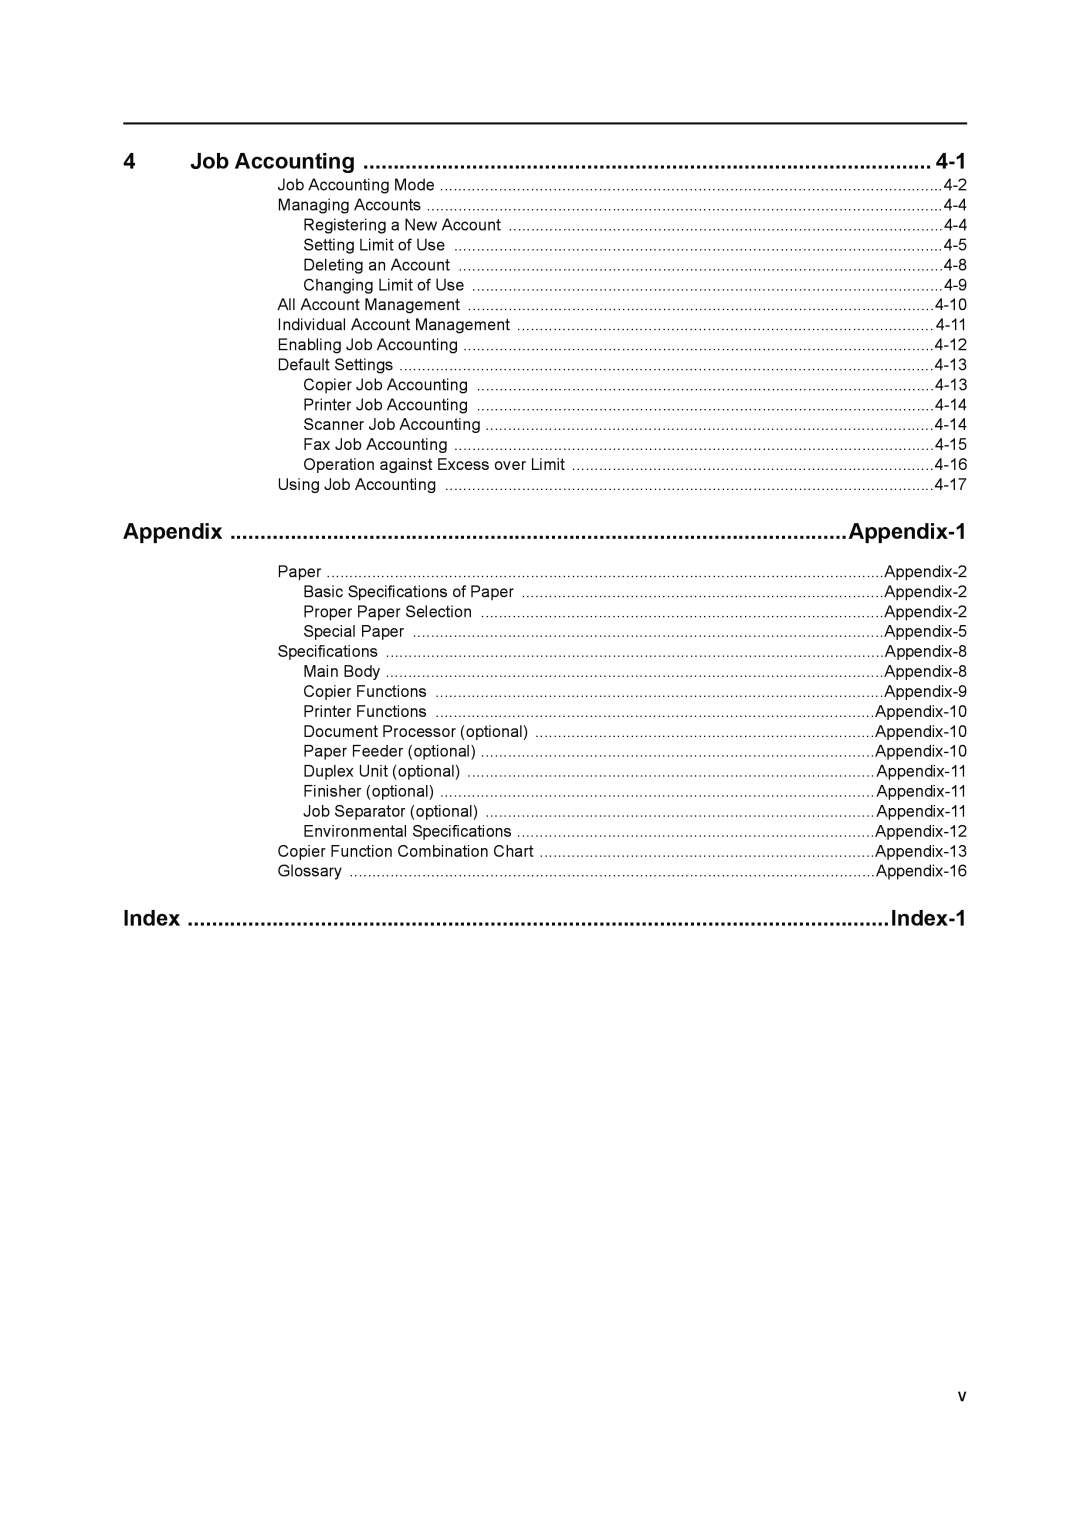 Kyocera 1650, 2050, 2550 manual Job Accounting, Appendix-1, Index-1 